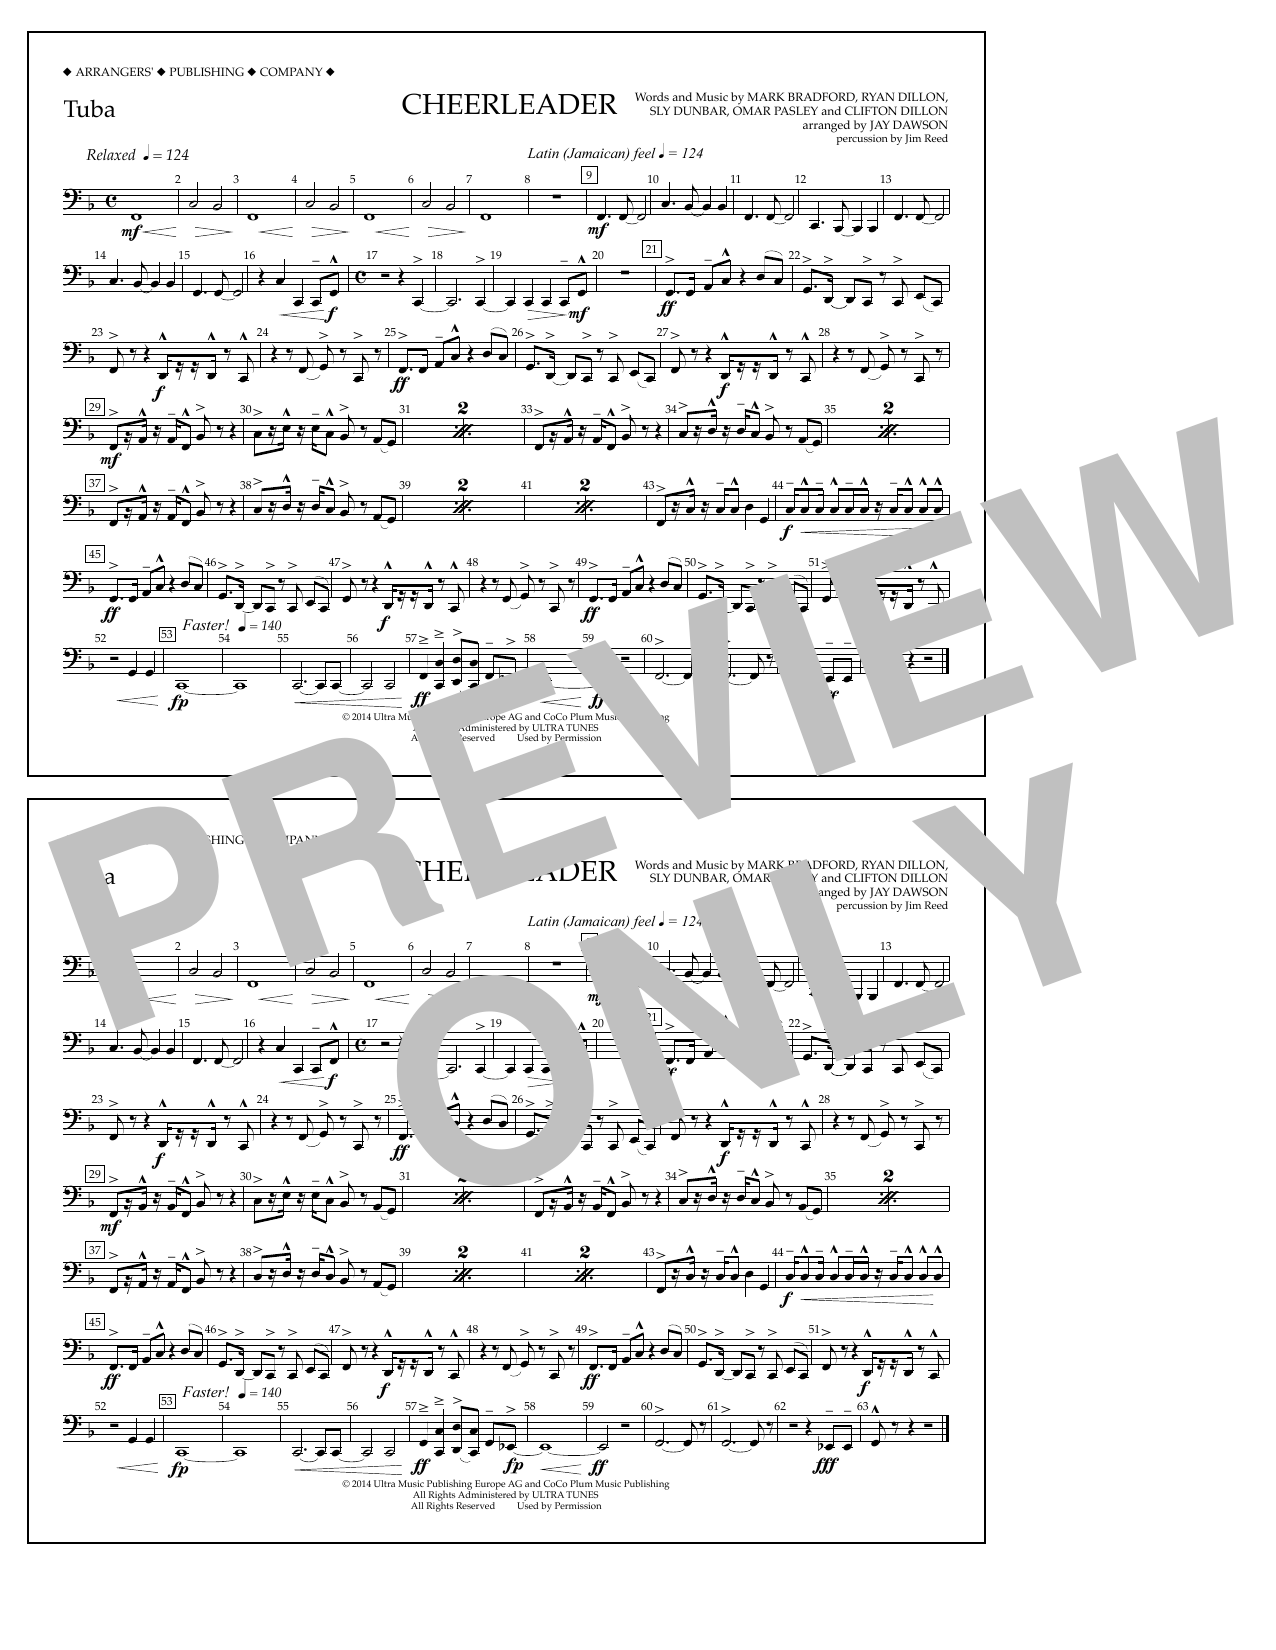 Jay Dawson Cheerleader - Tuba Sheet Music Notes & Chords for Marching Band - Download or Print PDF